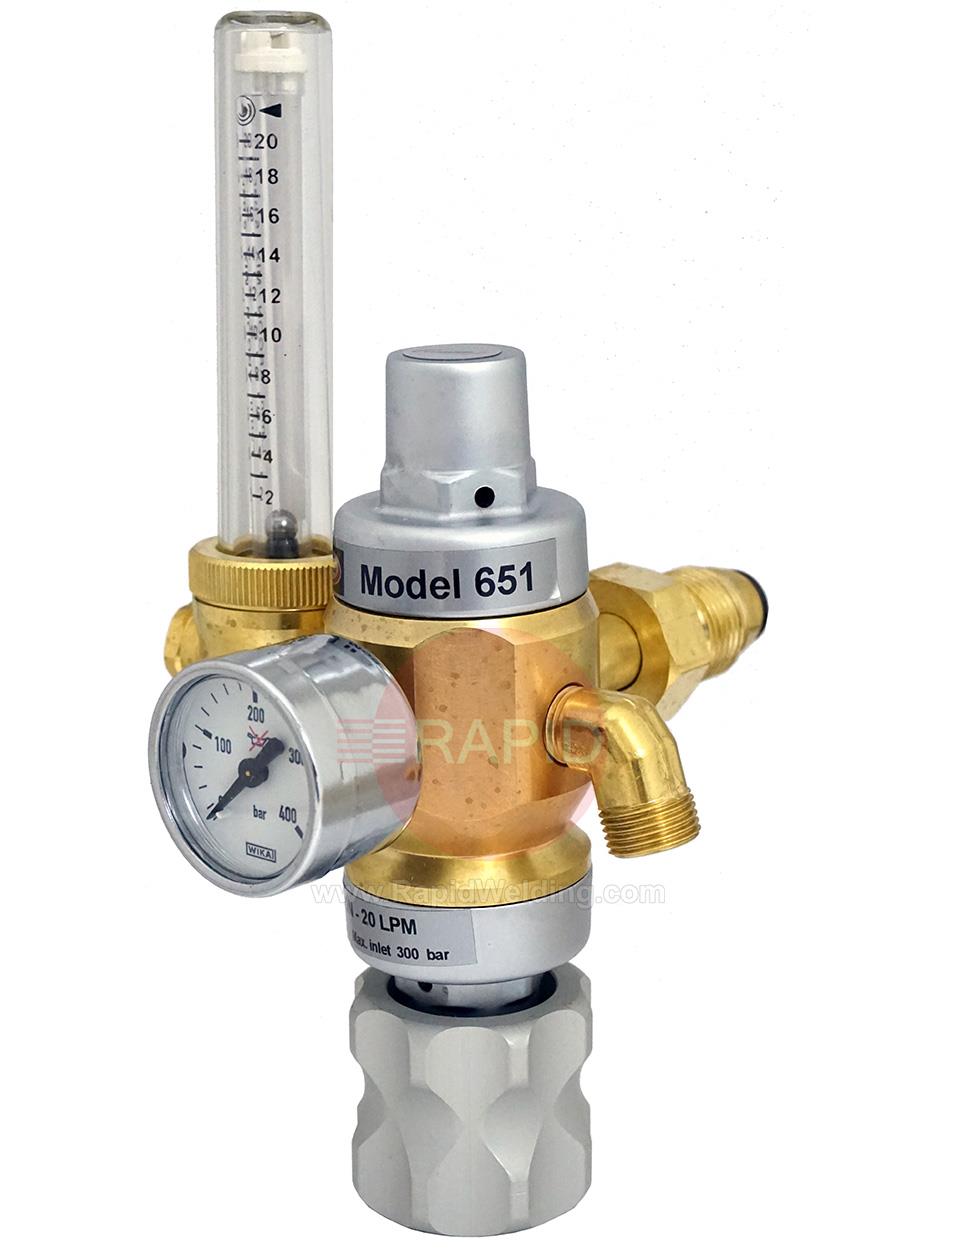 3100723  Harris Gas Saving Regulator - Model 651 20lpm, Adjustable, G5/8 Side Entry